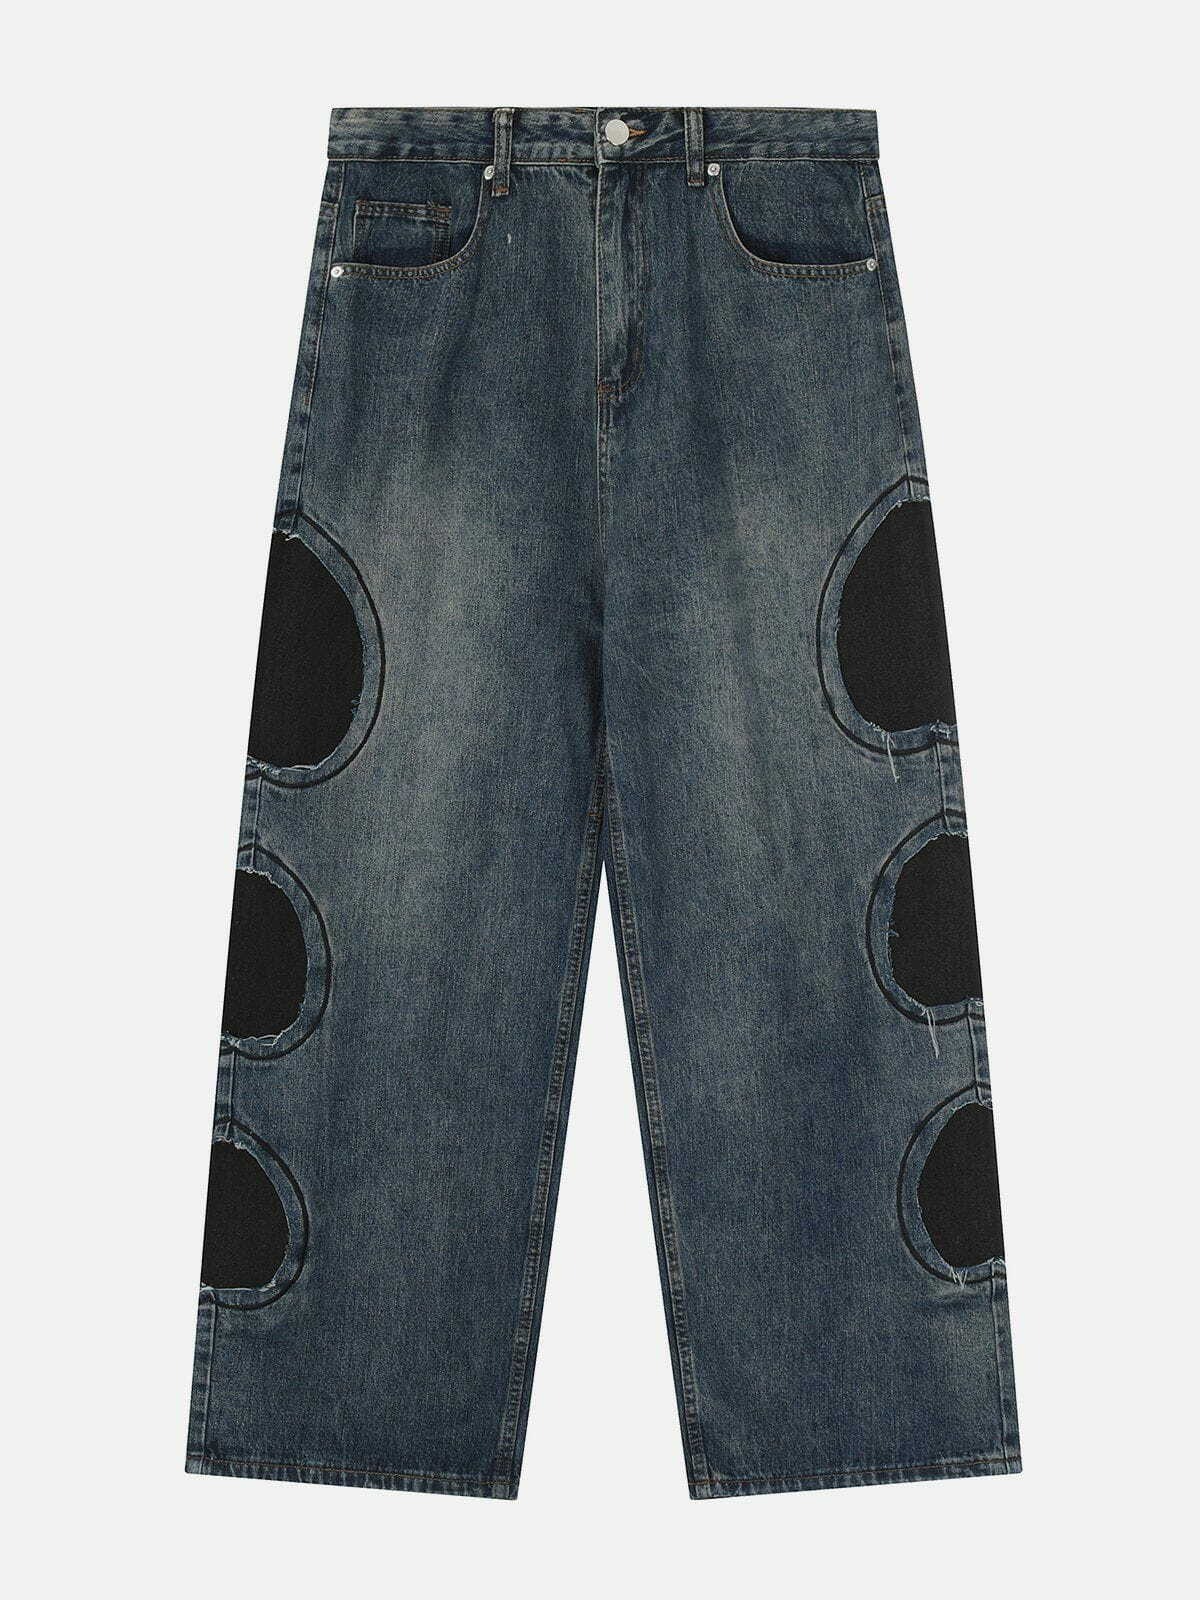 patchwork edgy jeans vintage streetwear charm 1341